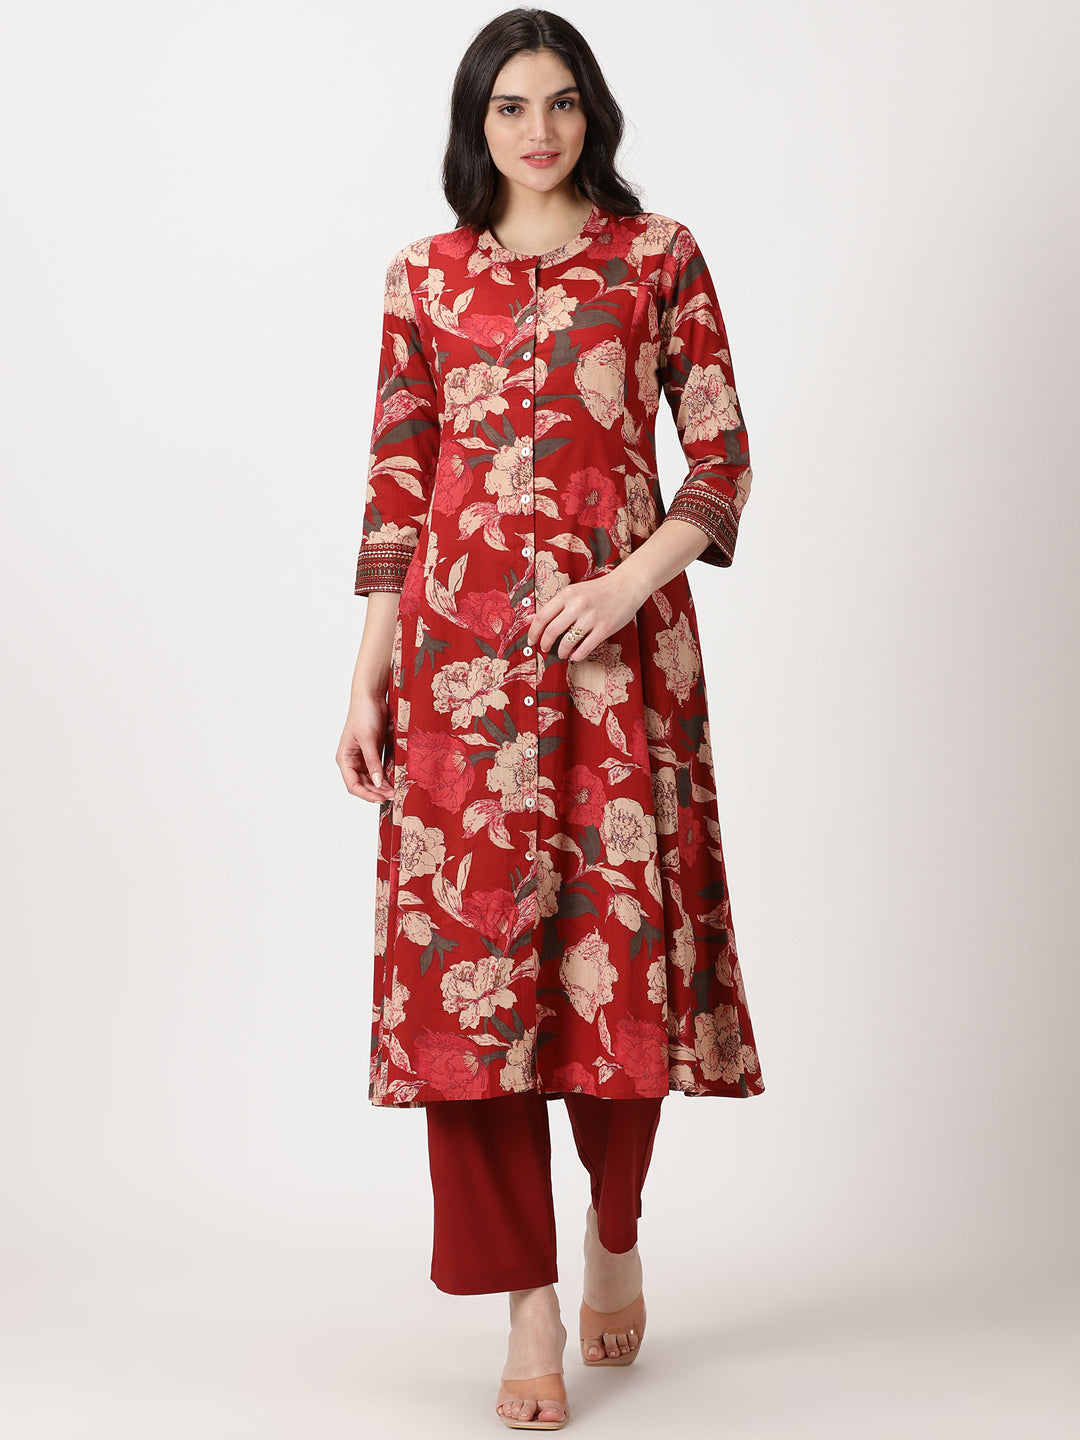 Cabric-st Edition-designer Red Kurti With Beautiful Printed Design On All  Over The Kurti With Light Orange Plazo, Tail Cut Kurti, High Low Kurti,  डिज़ाइनर कुर्ती - Cabric, Mumbai | ID: 26145008173